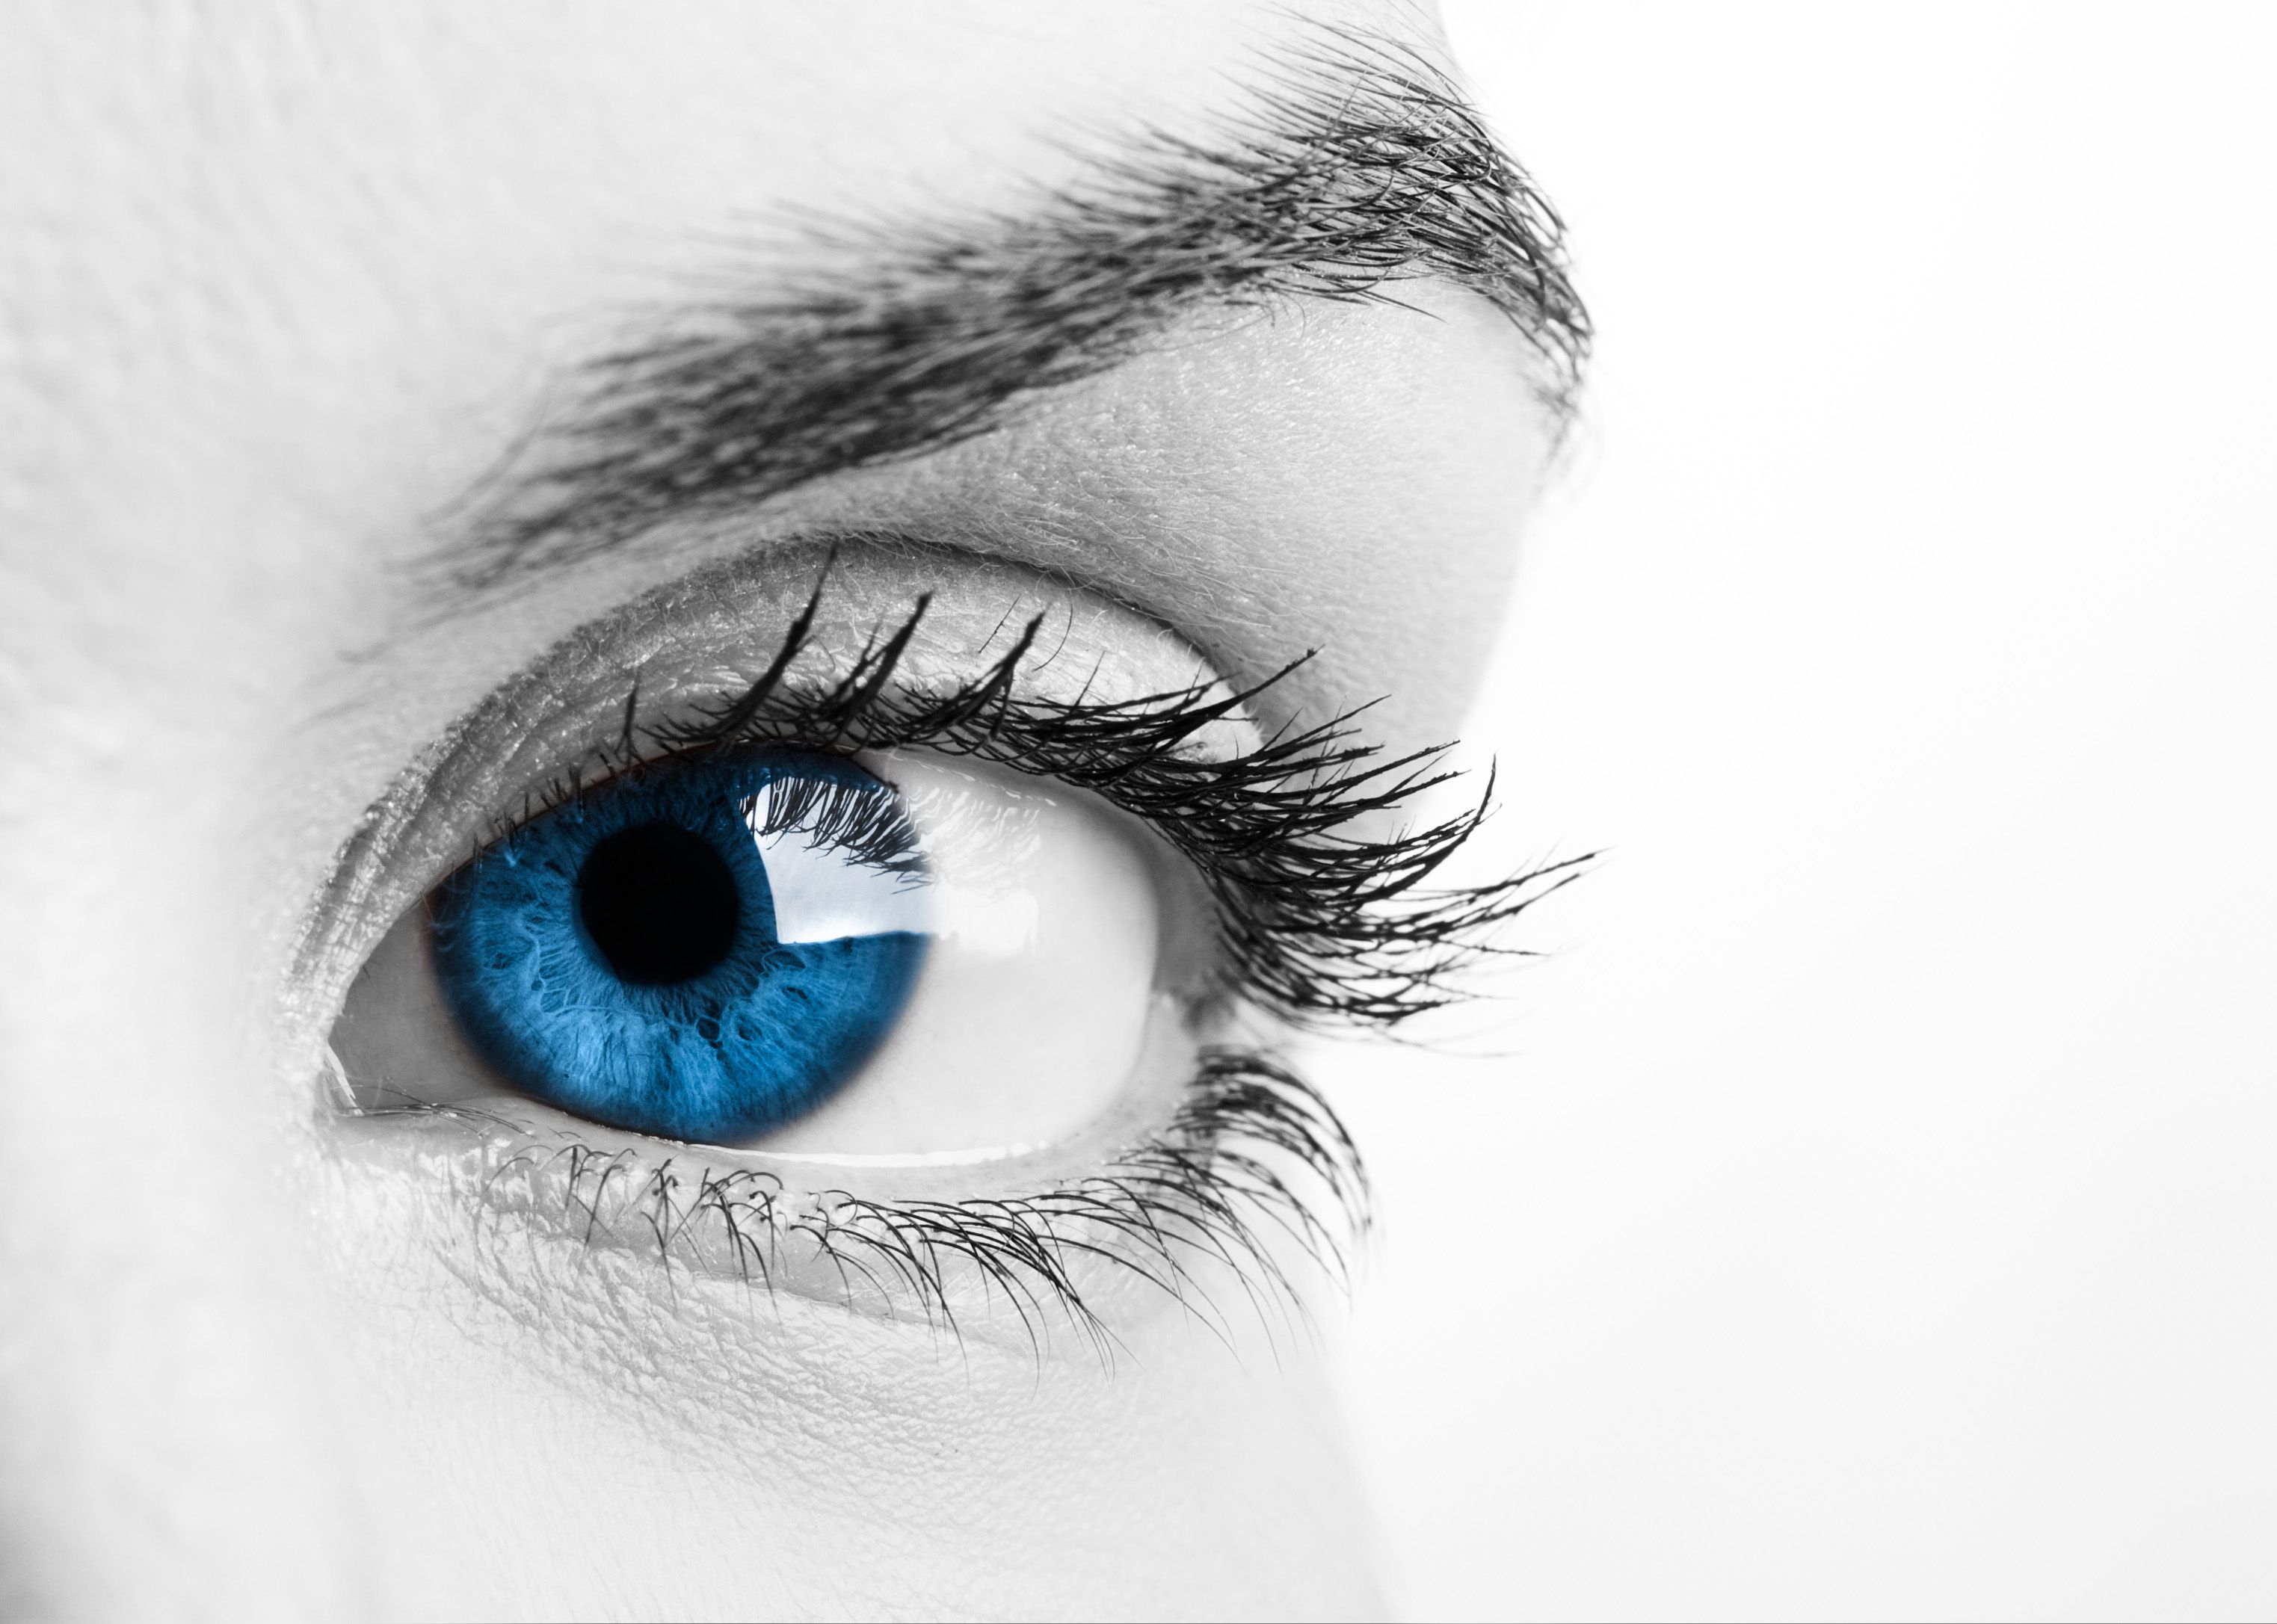 Blue eyed people related to single ancestor: Study Blue-eyed